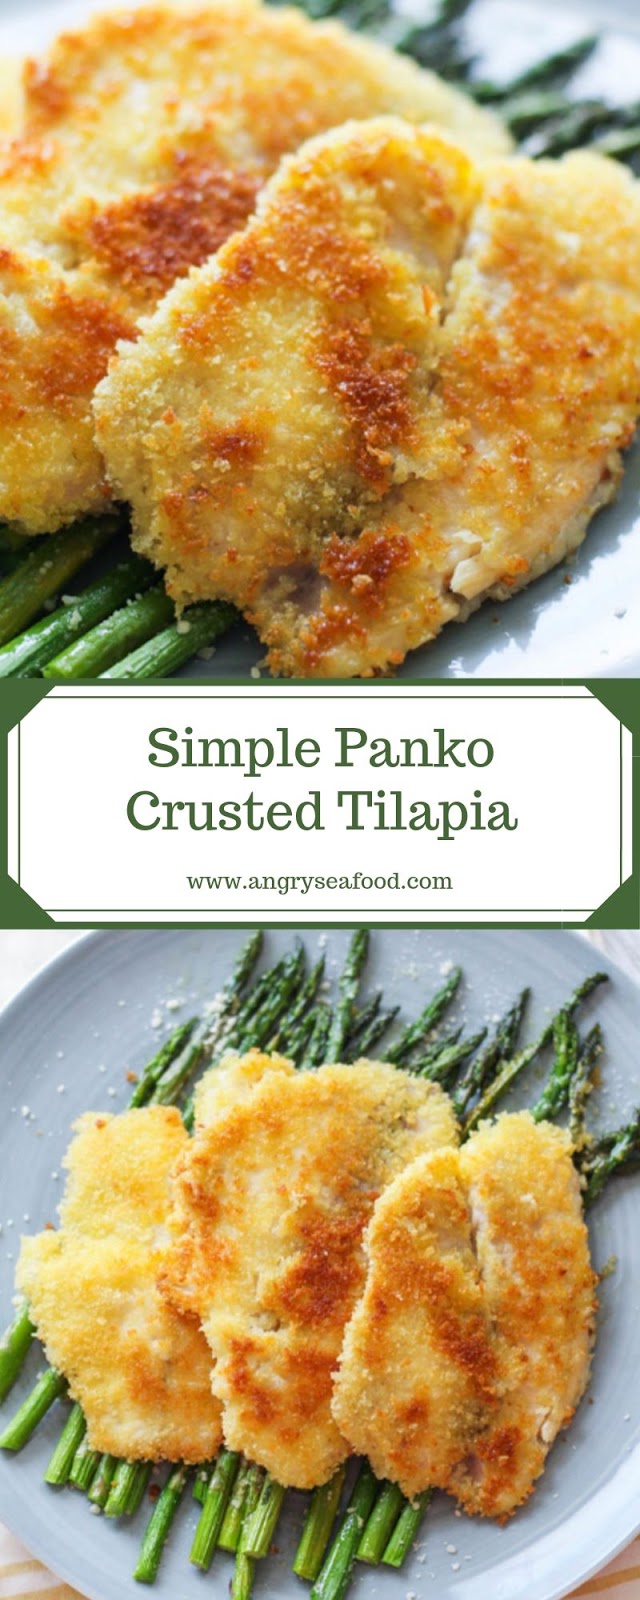 Simple Panko Crusted Tilapia